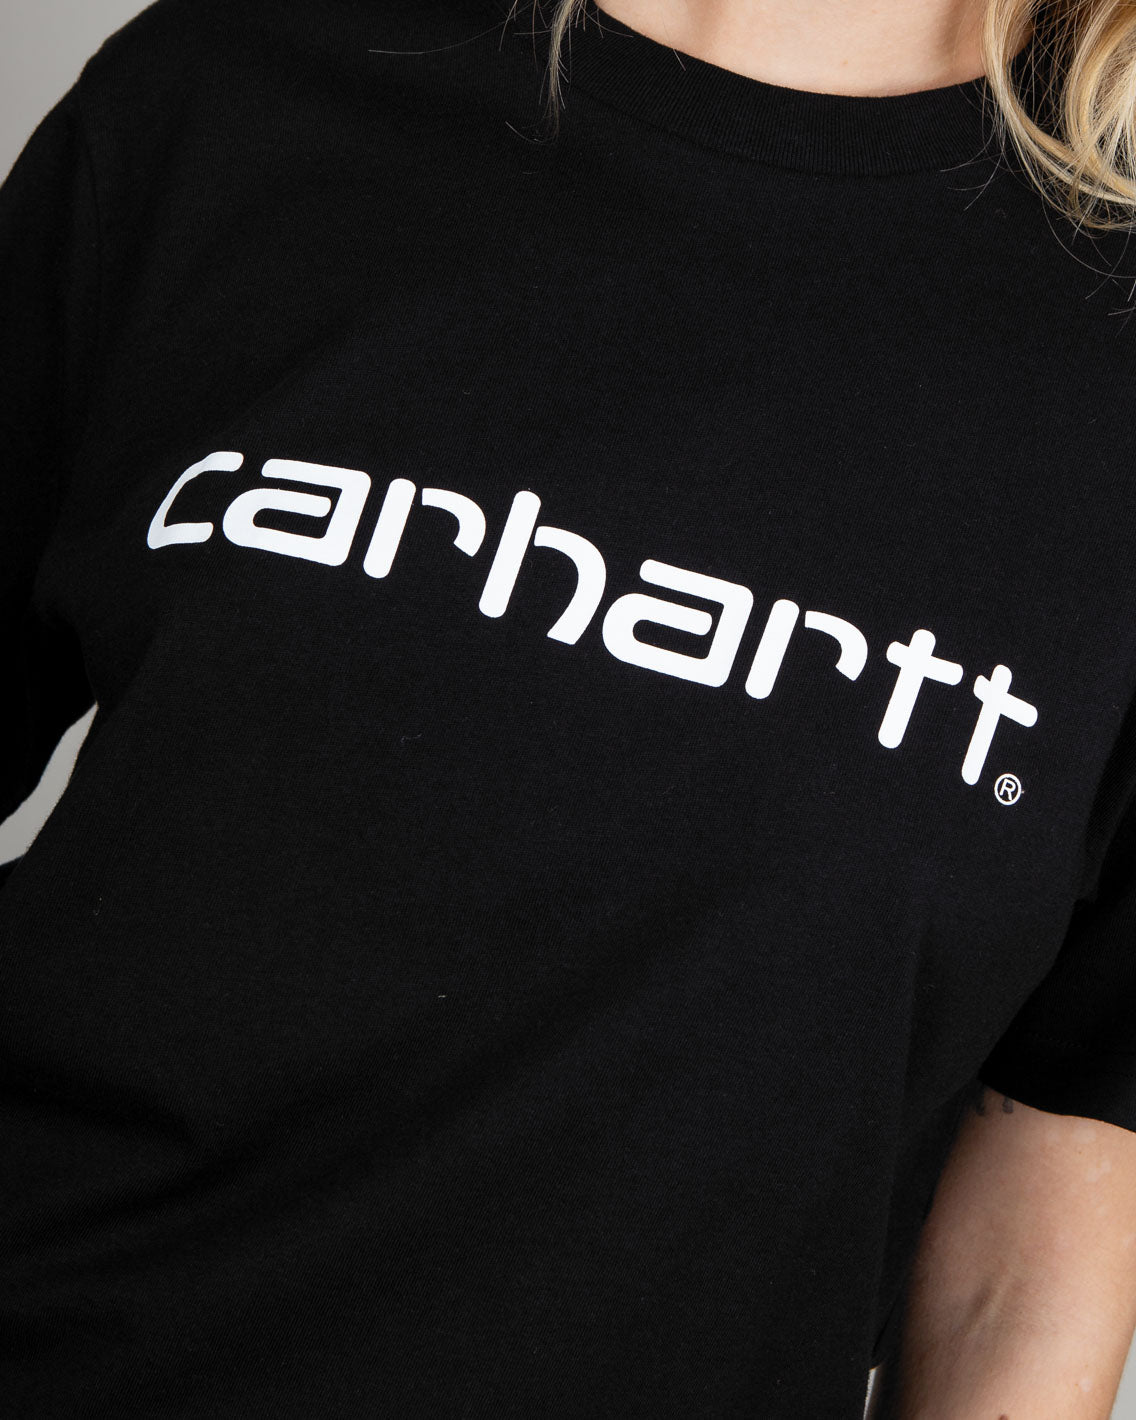 Carhartt - Script T-Shirt - Black / White